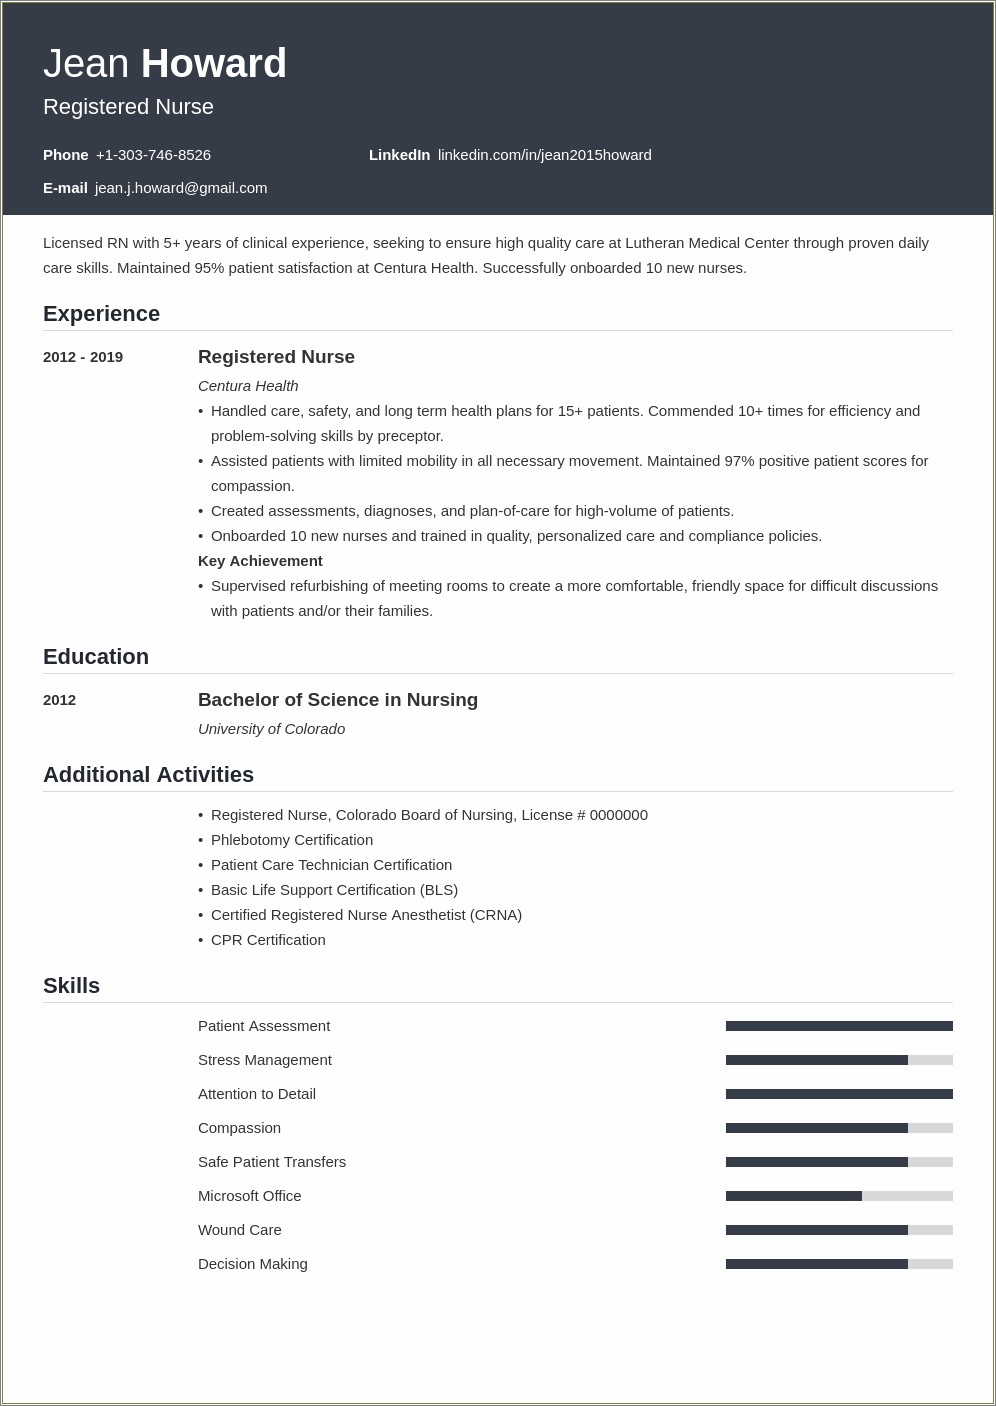 Professional Summary For Registered Nurse Resume